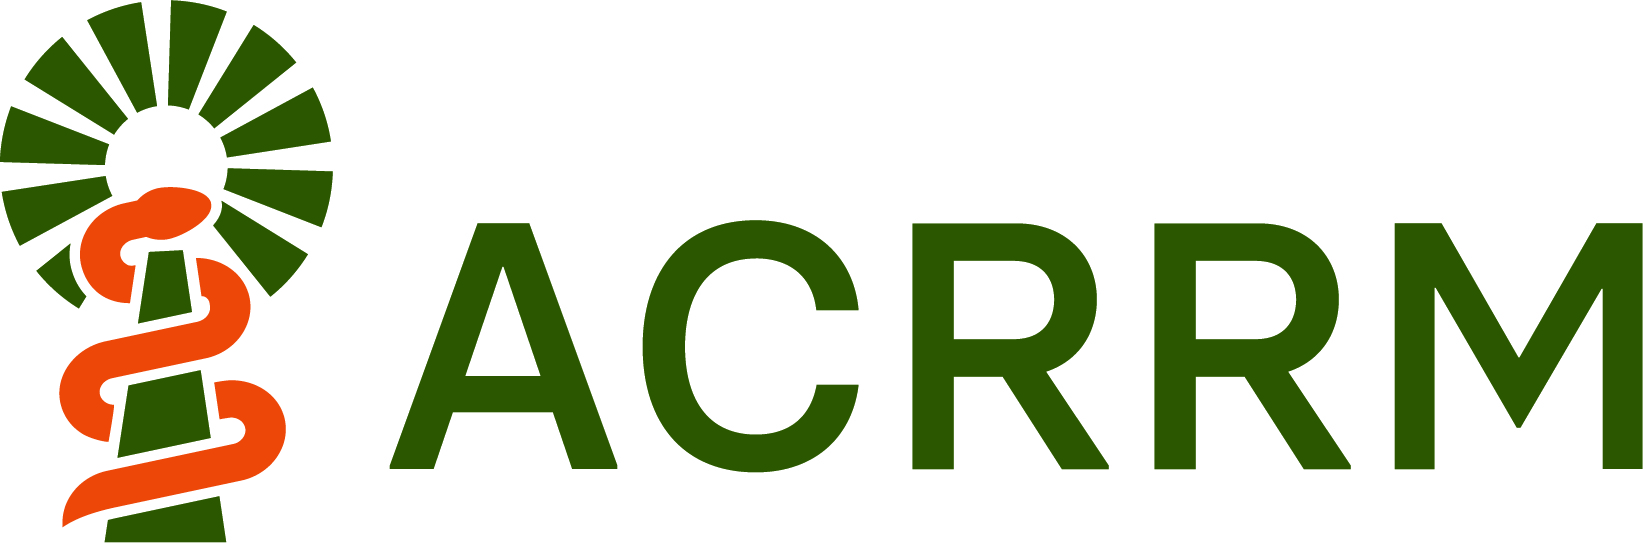 ACRRM Logo